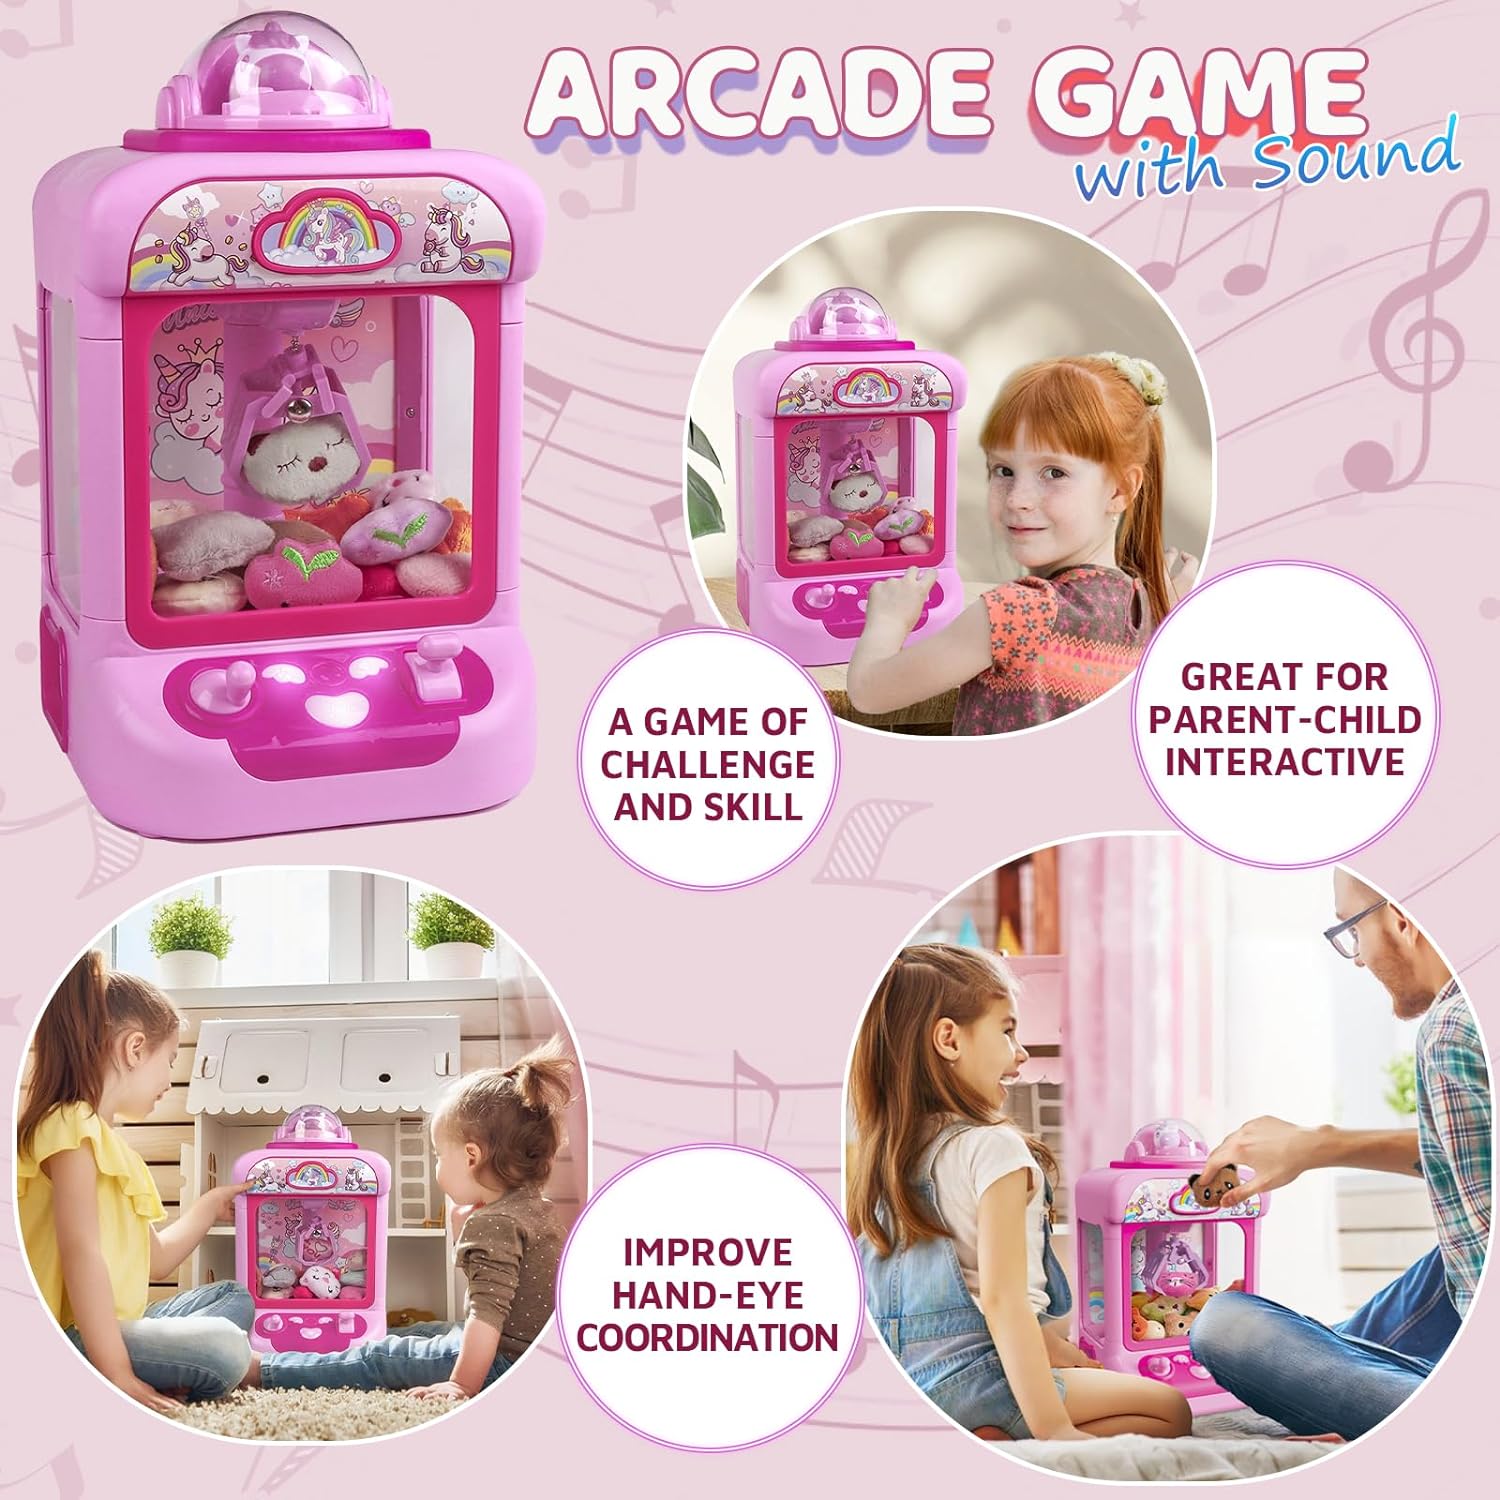 Claw Machine for Kids, Mini Vending Machine, Candy Grabber Prize Dispenser with Sound & 20 Mini Plush Toys - Cykapu